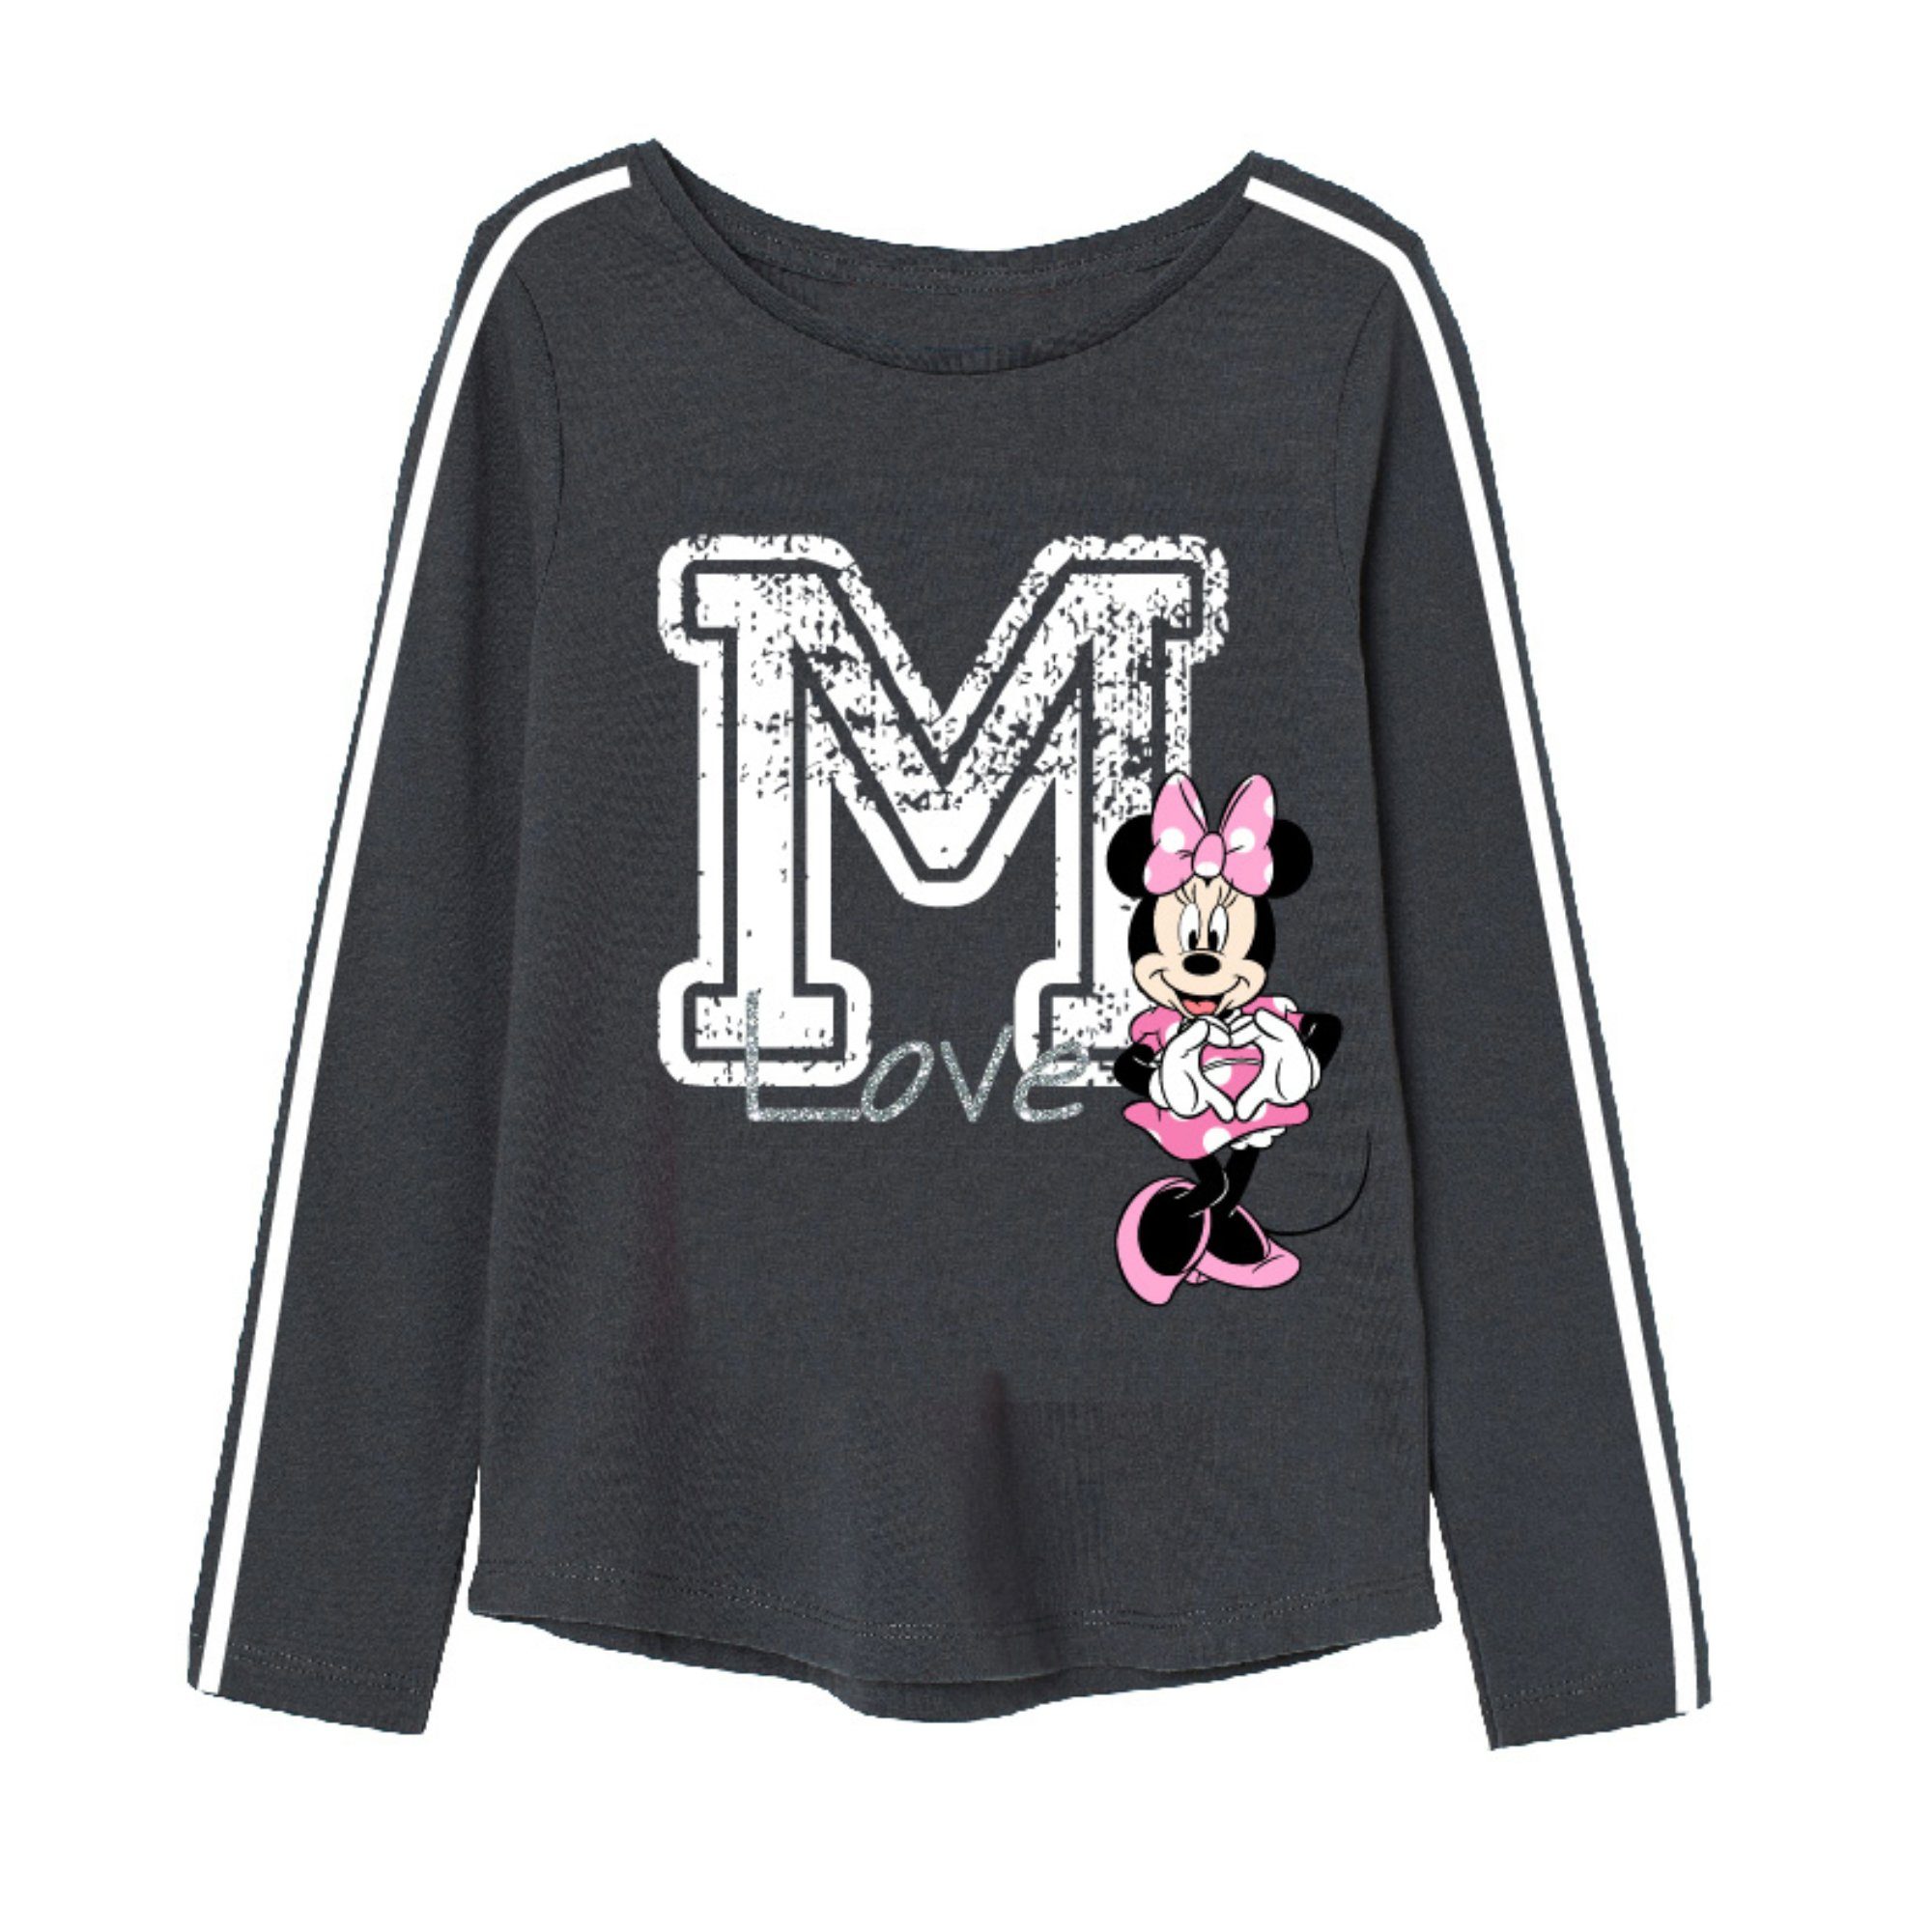 Disney Minnie Mouse Langarmshirt Minnie Maus Kinder Mädchen Shirt Gr. 104 bis 134, 100% baumwolle, Rosa oder Grau Dunkelgrau